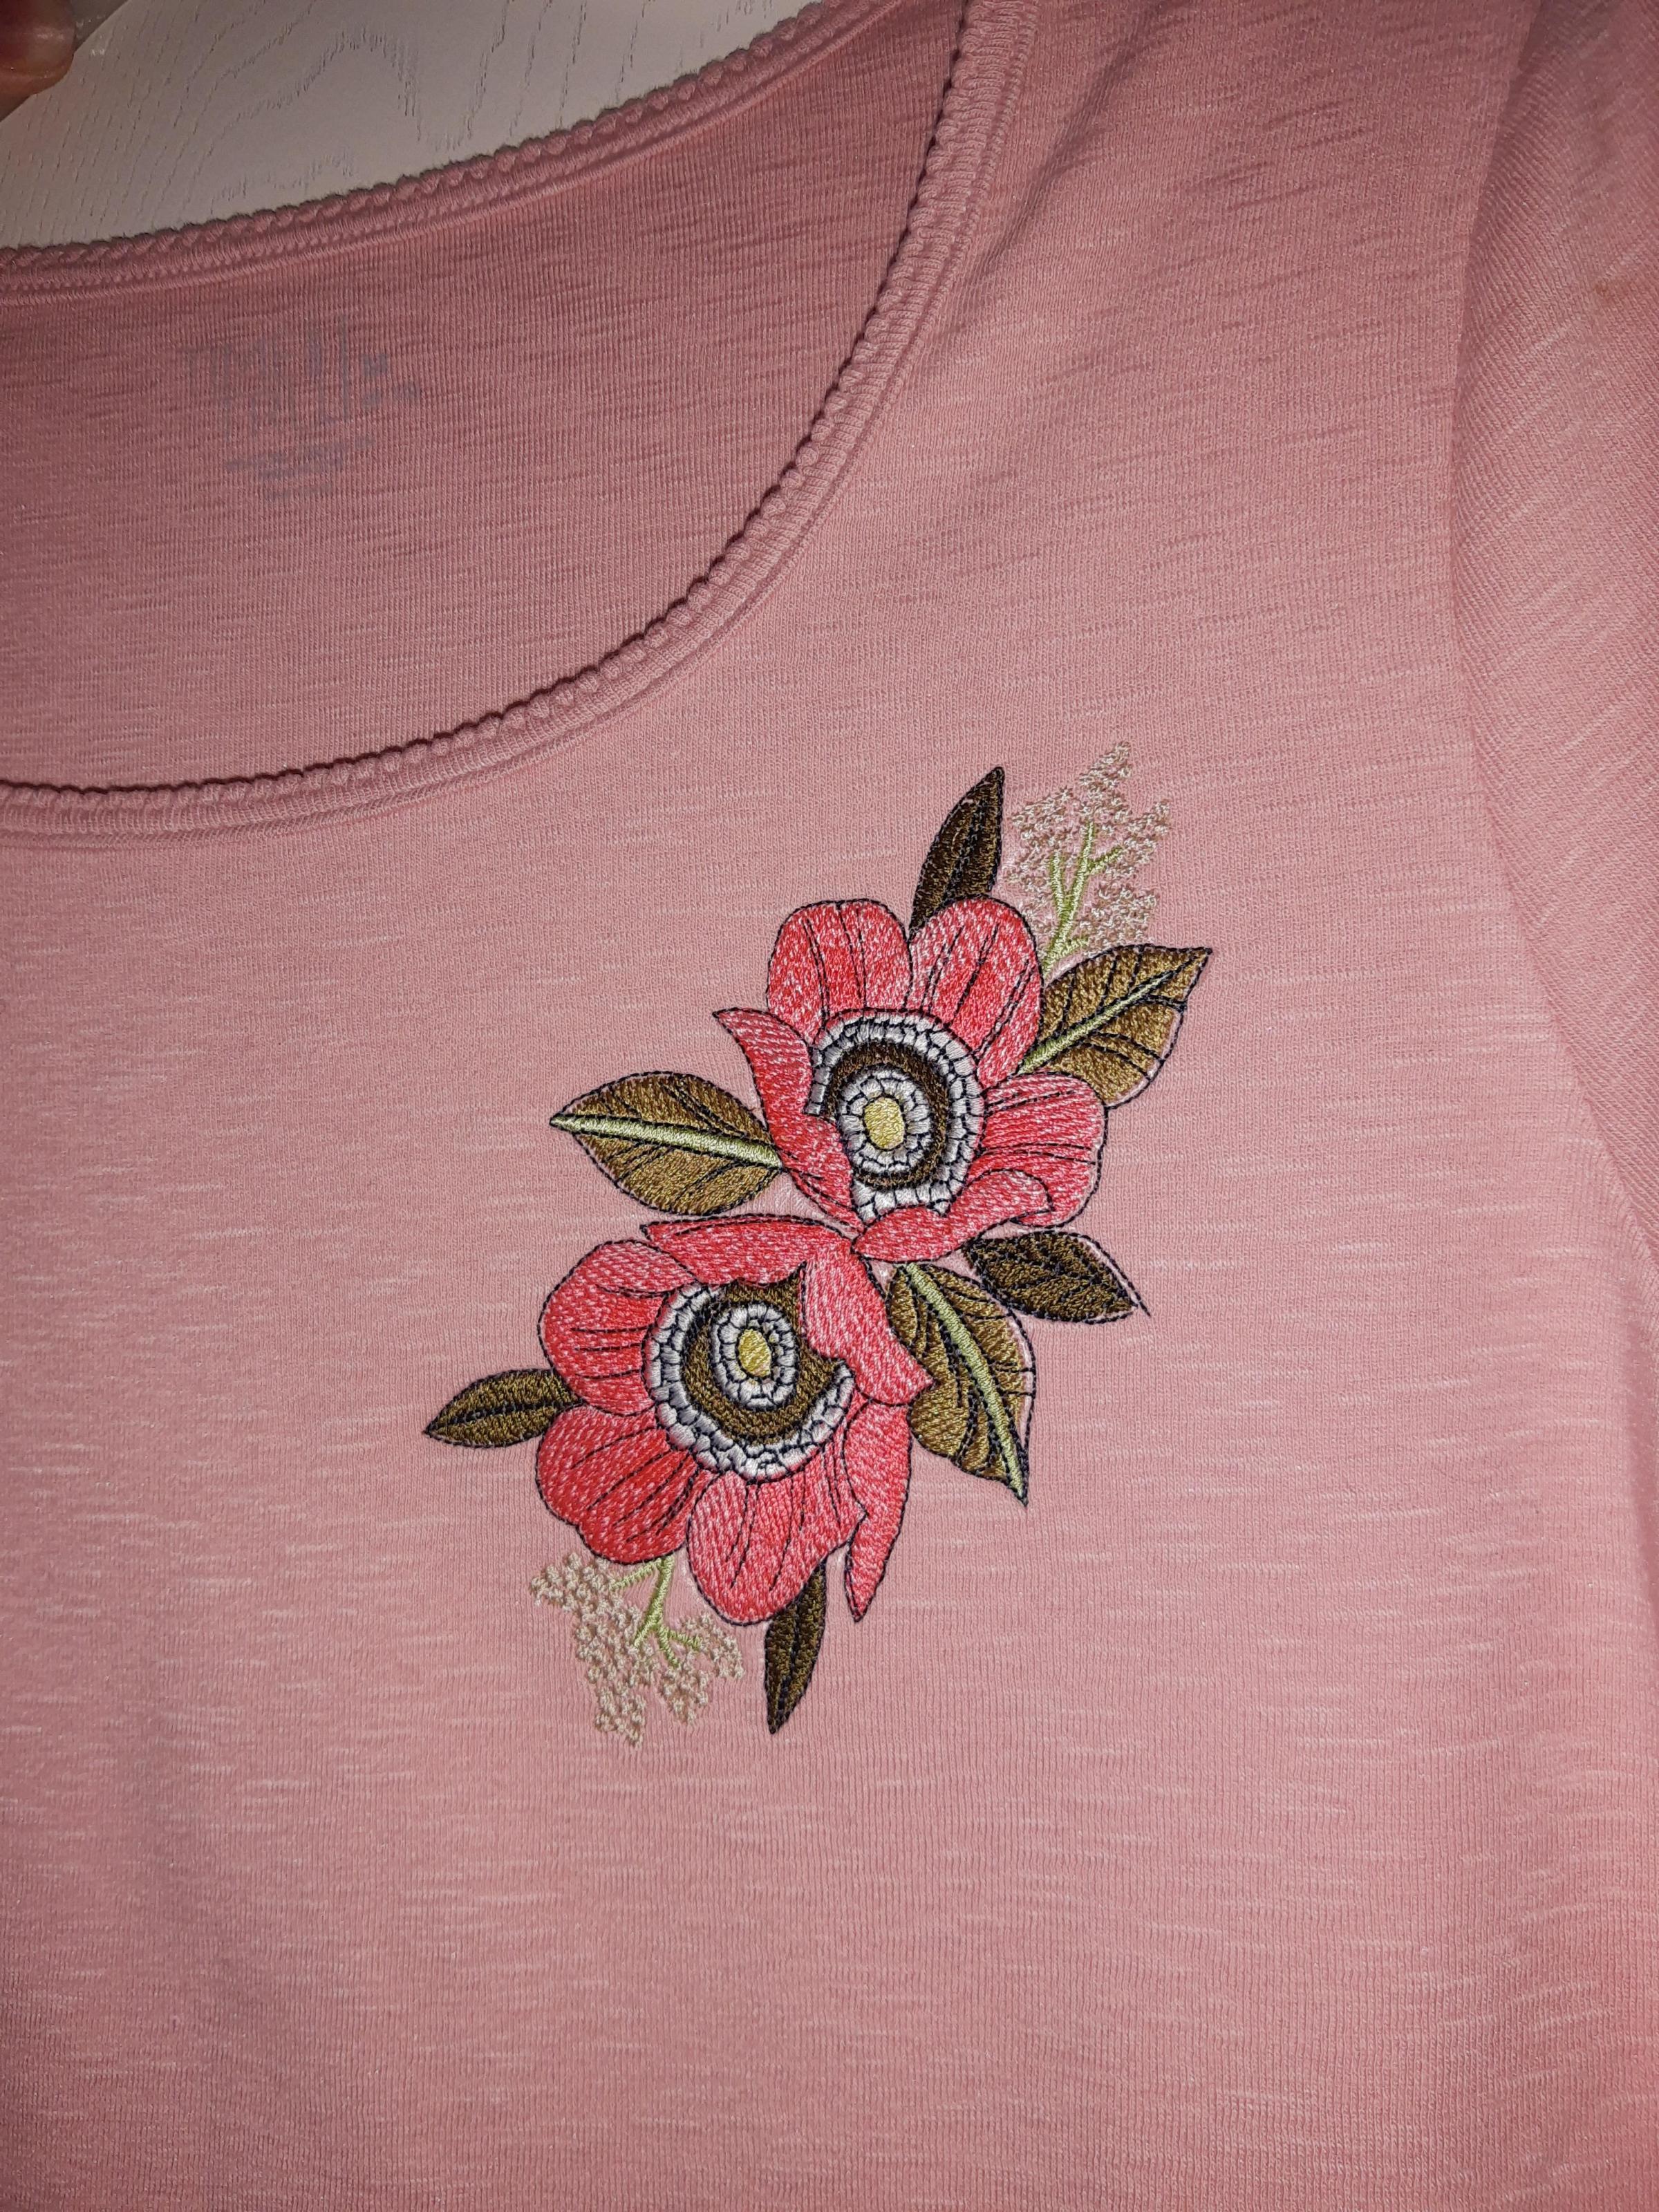 Dog-rose embroidery design